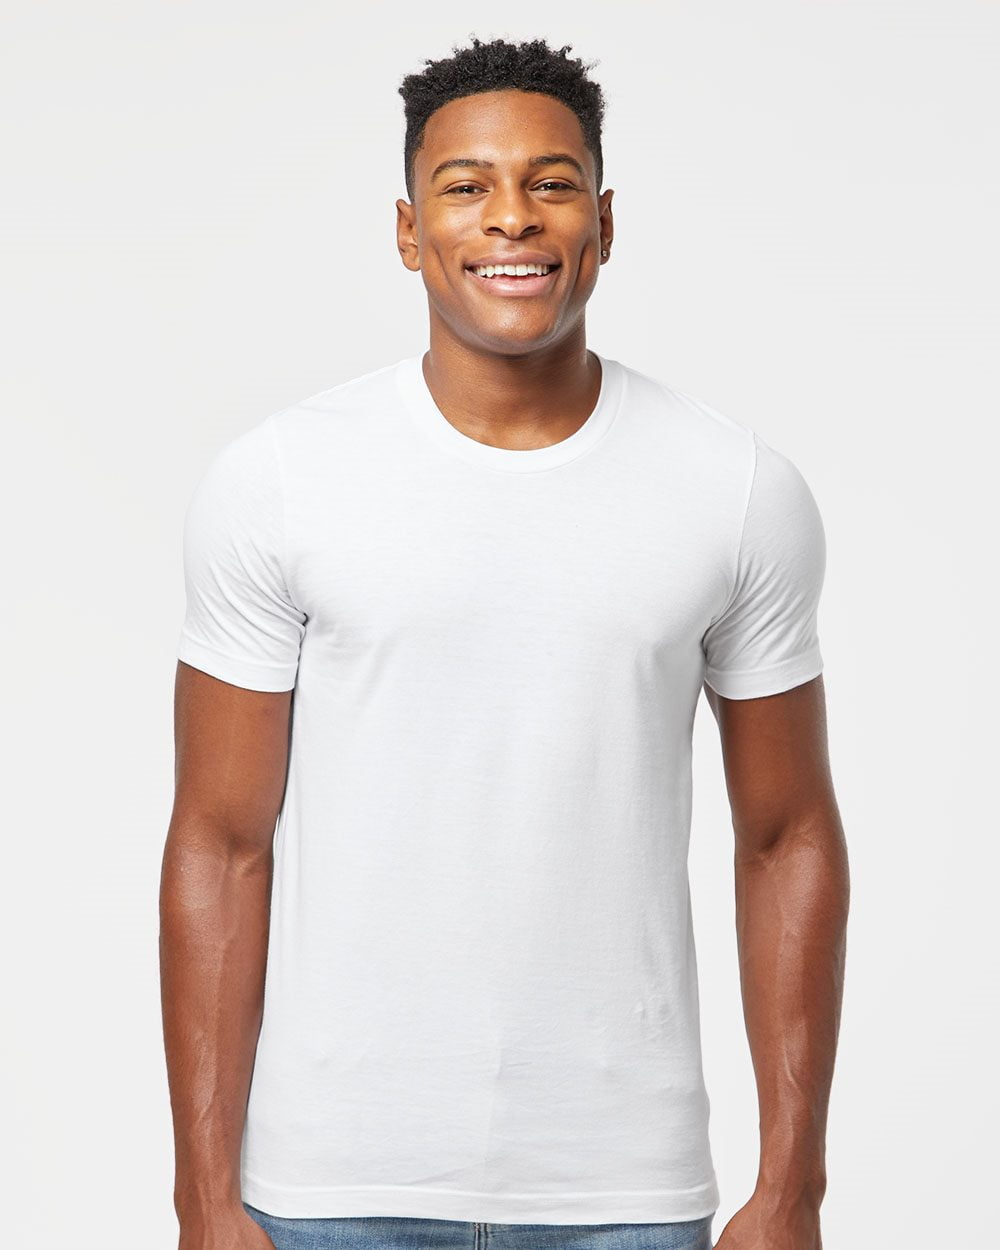 Size Upto 3XL Men's Premium Basic Tank Top Jersey Casual Shirts 